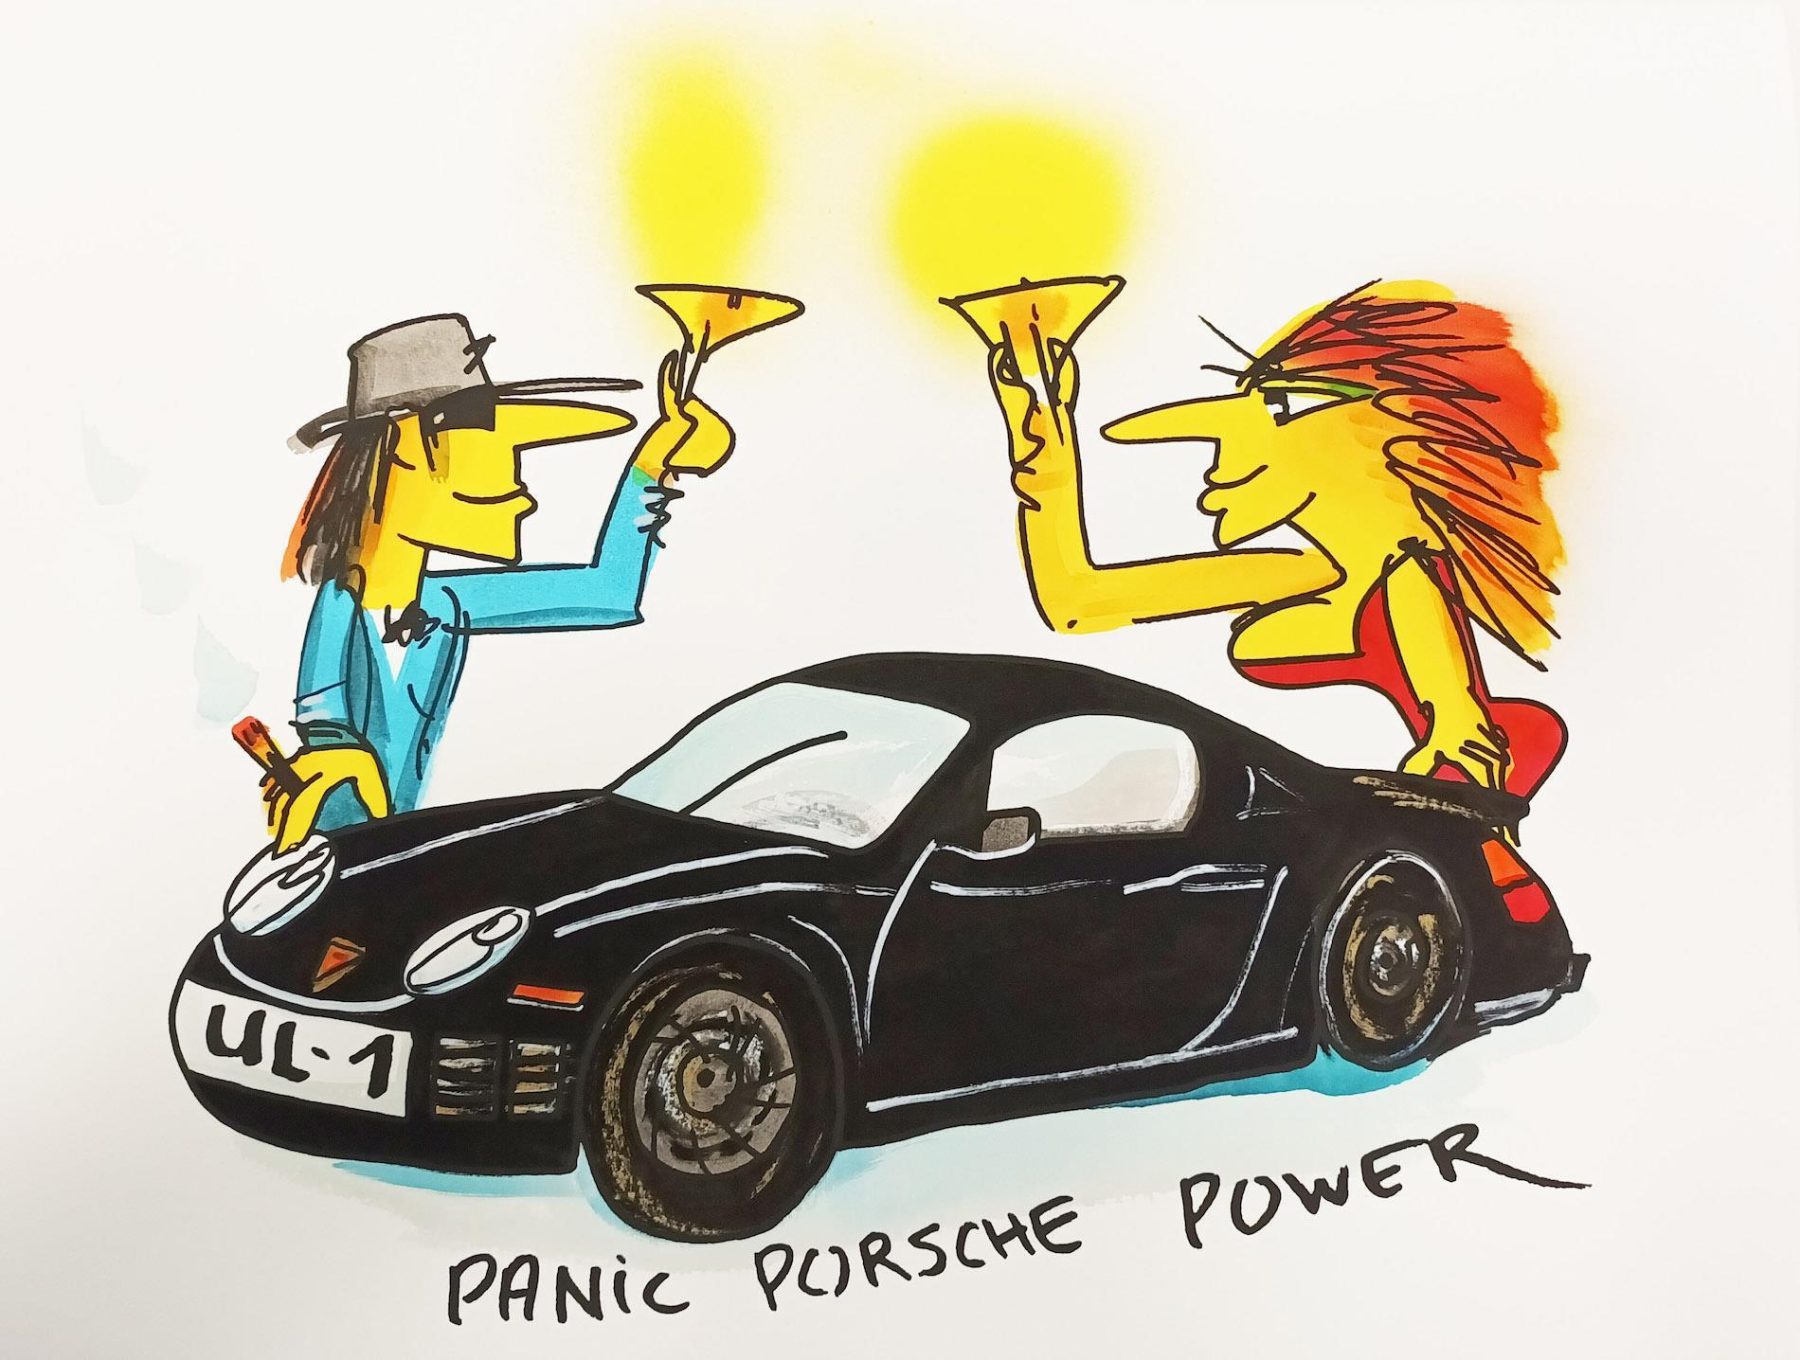 Panic Porsche Power (Black Edition) - Lindenberg, Udo - k-2312UL1